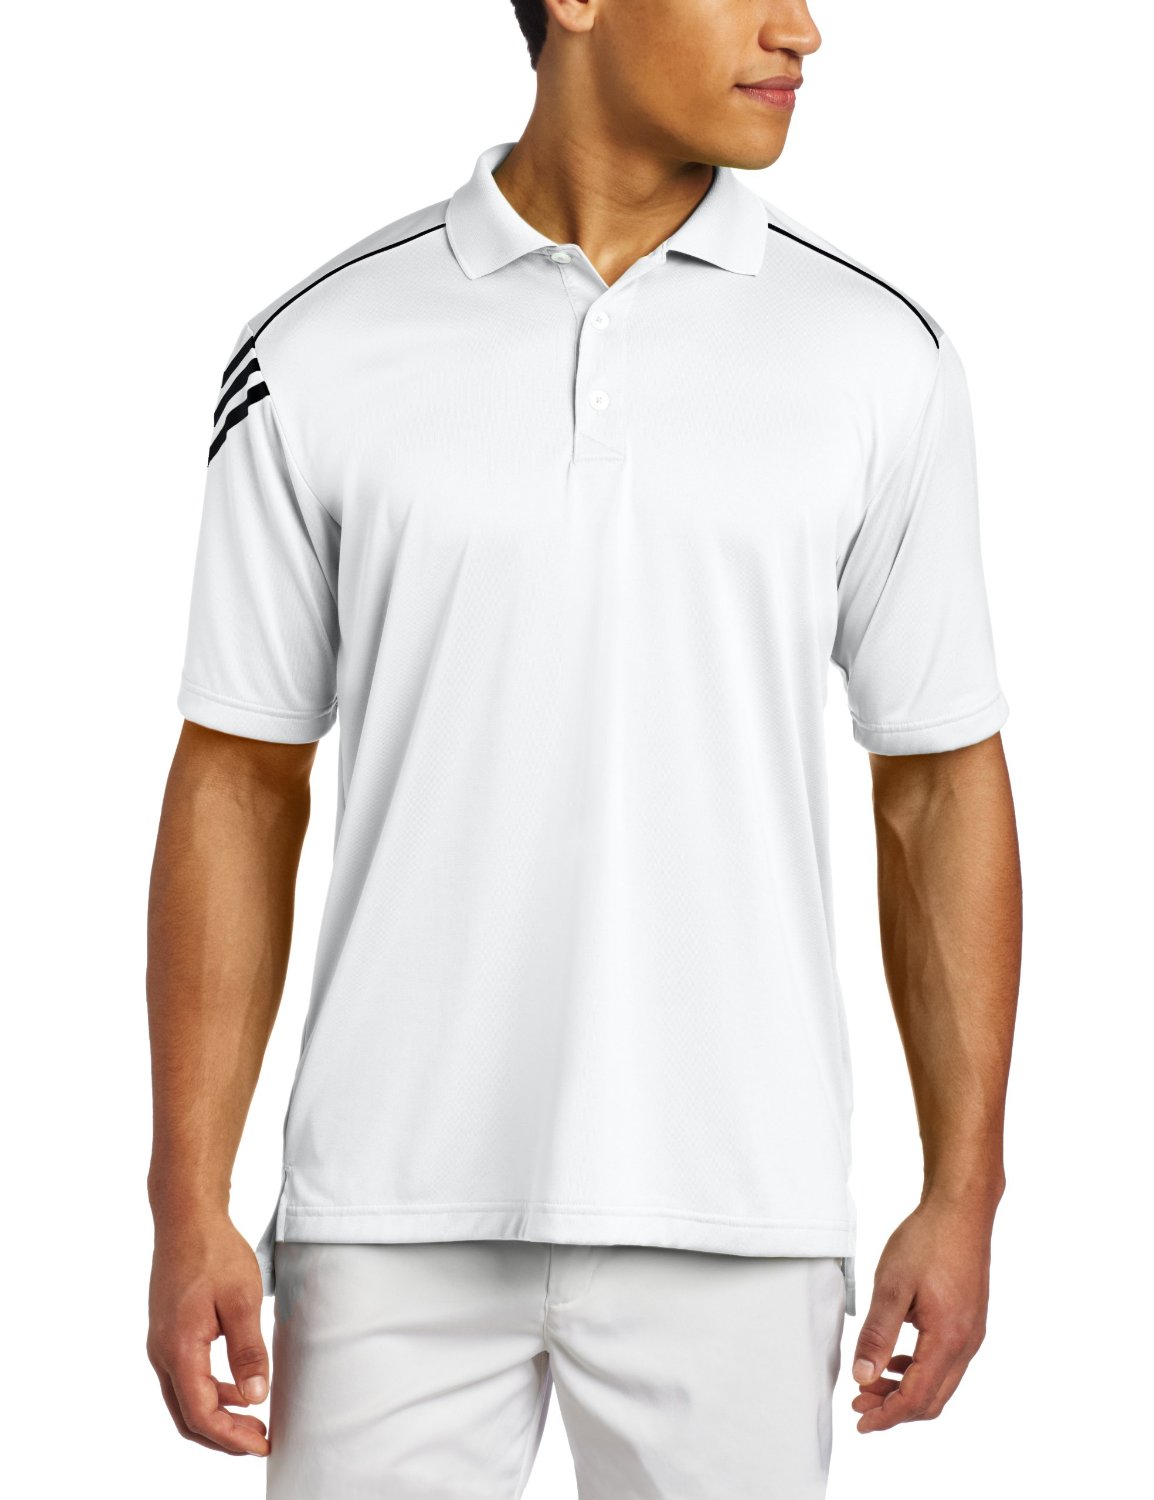 Adidas Mens ClimaCool 3 Stripes Golf Polo Shirts